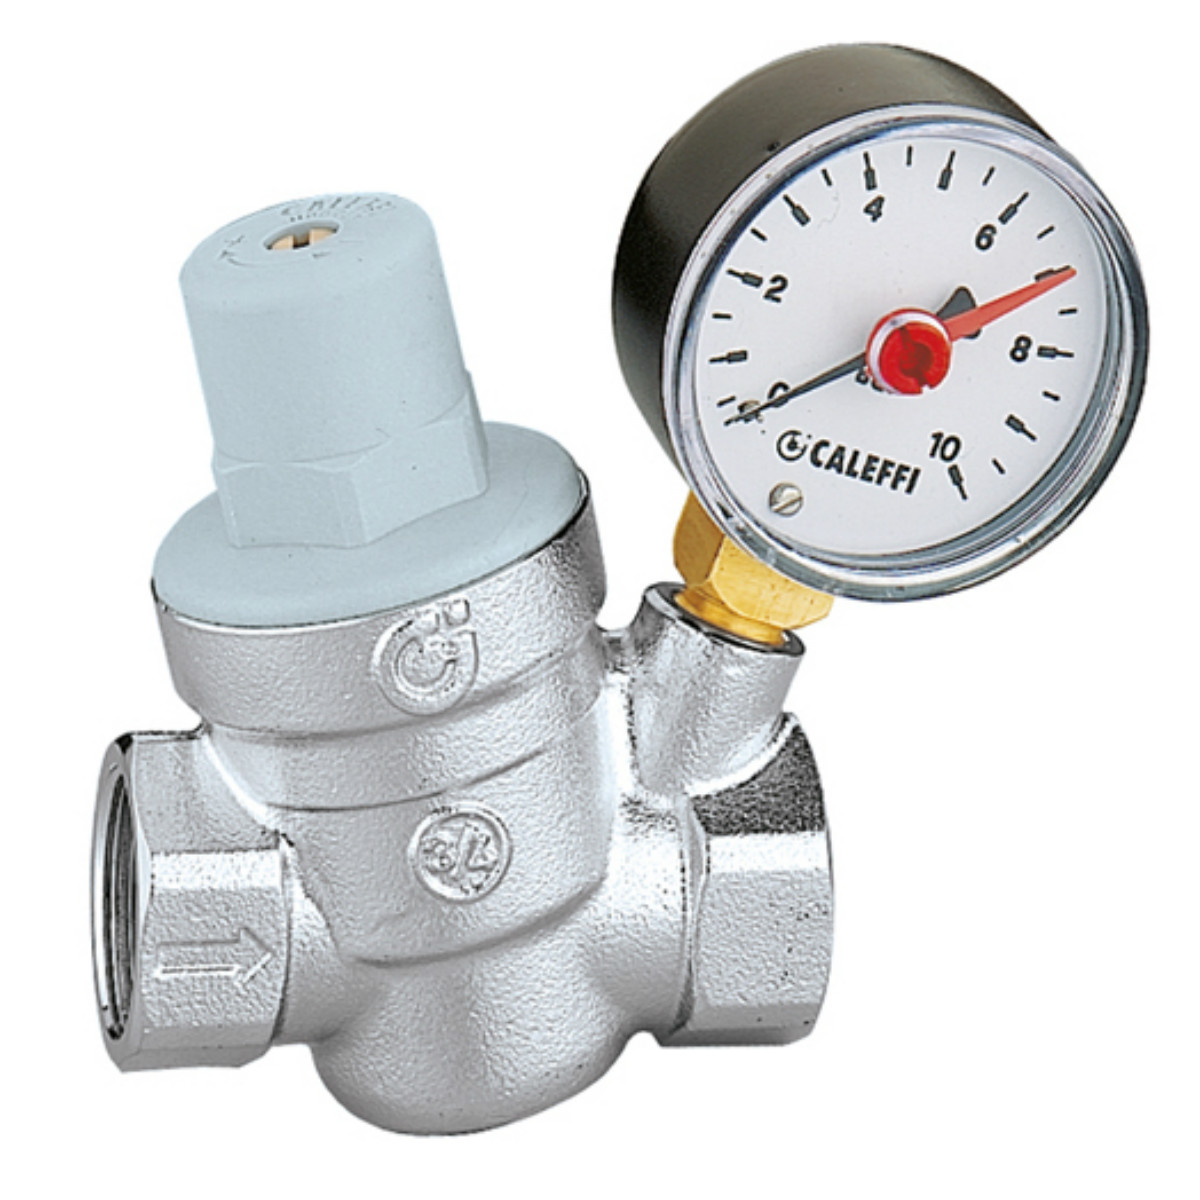 Kako podesiti regulator tlaka vode